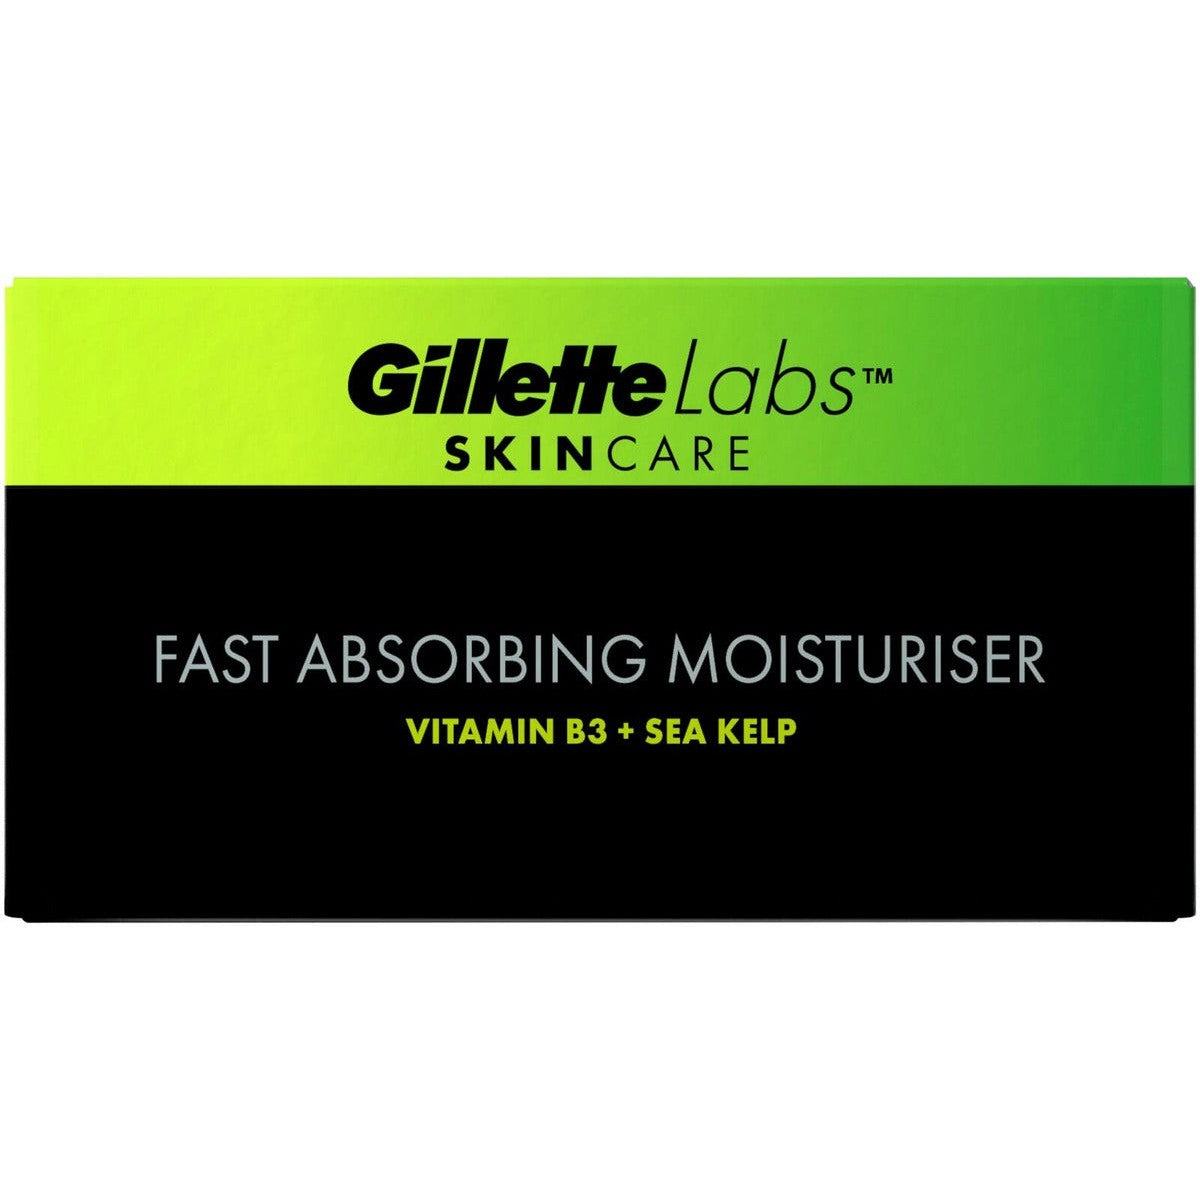 Gillette Labs Skincare Fast Absorbing Moisturiser with Vitamin B3 and Sea Kelp - 100ml